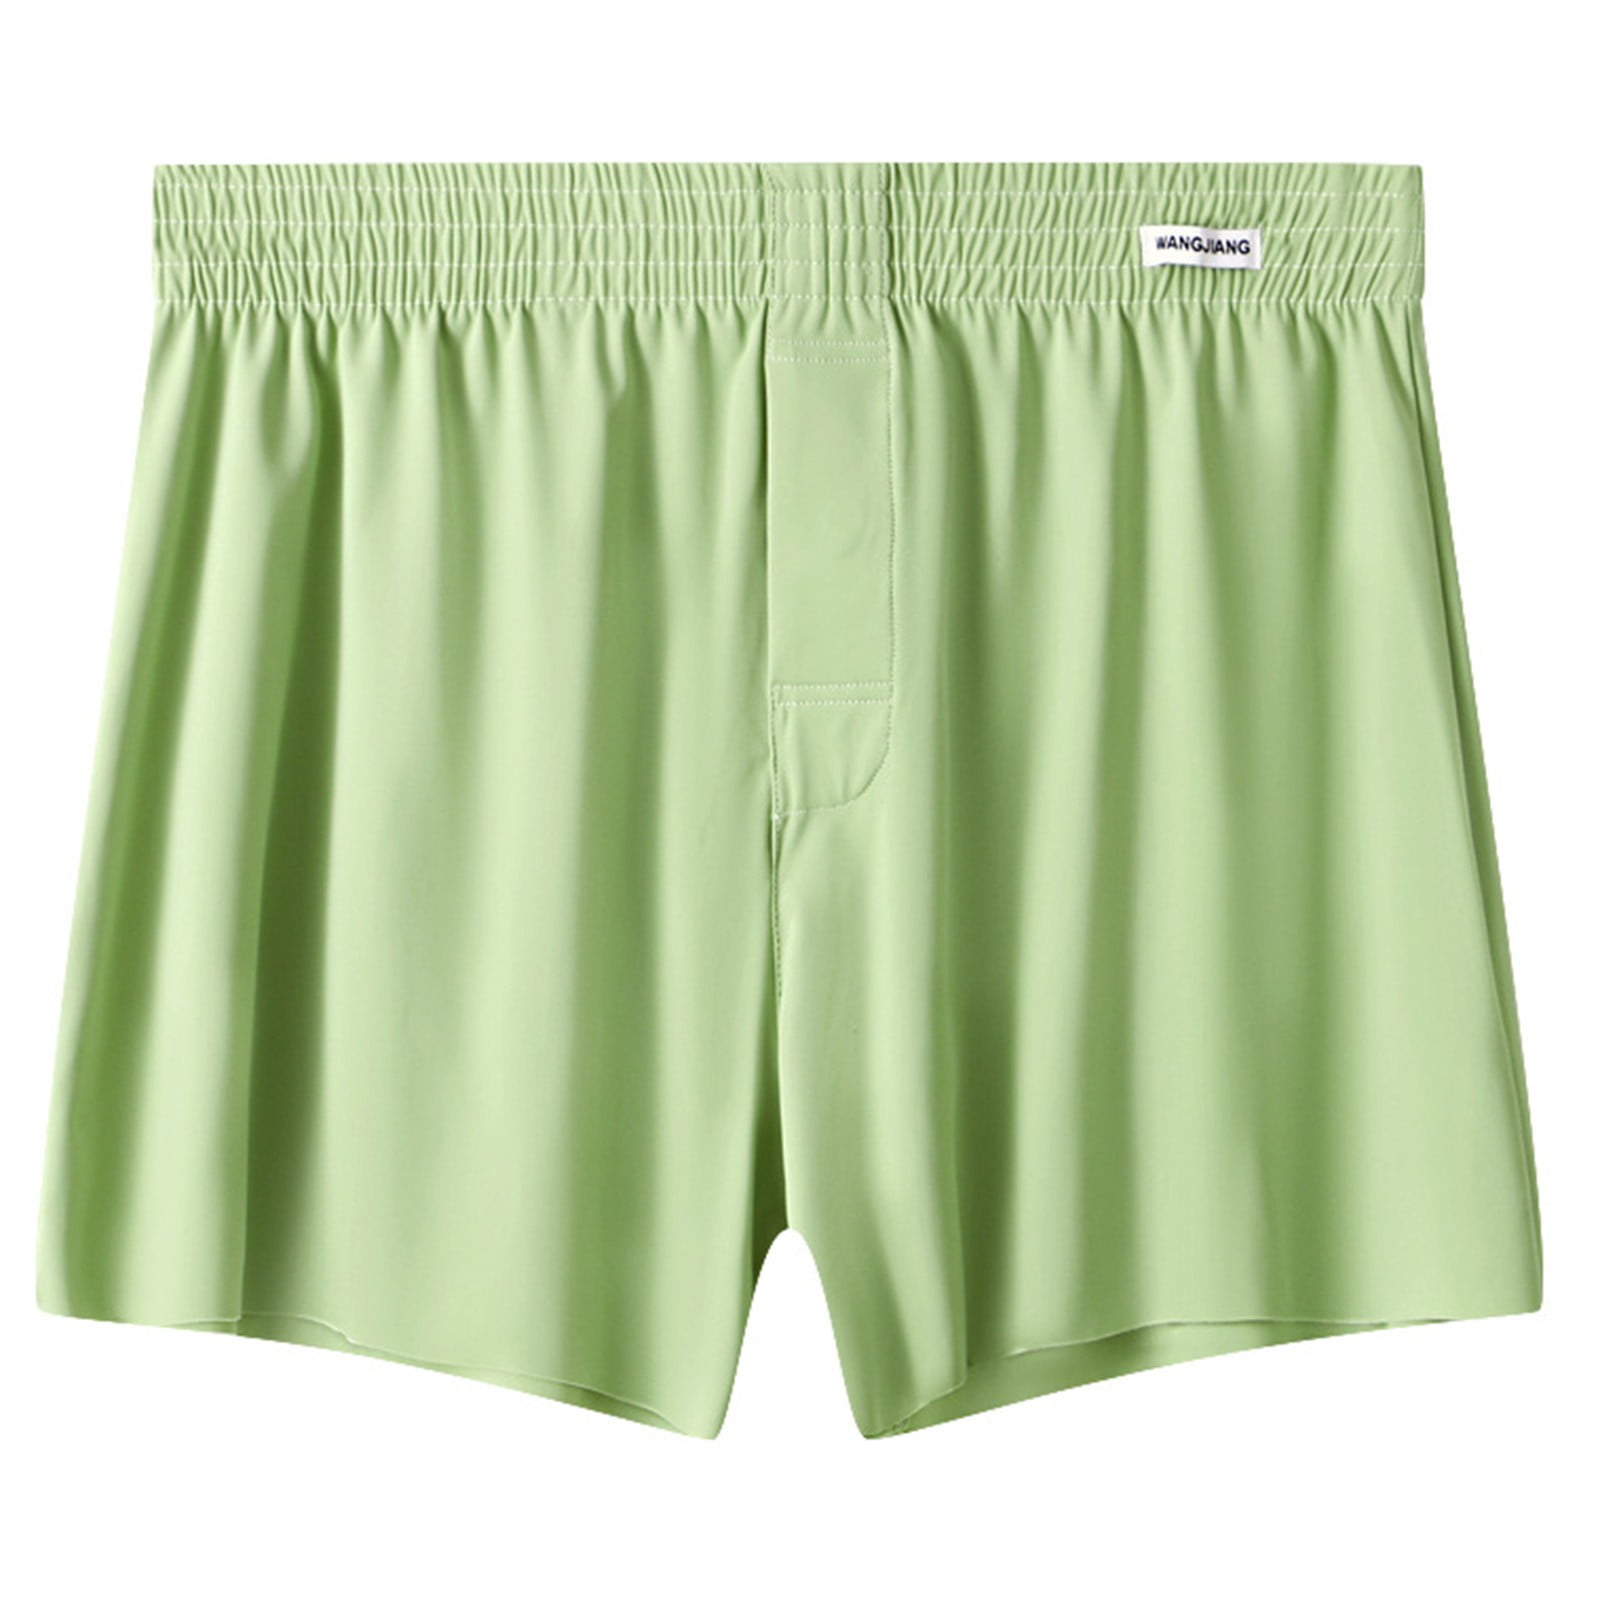 Plain Trunks Men Green Underwear, Size: Xxl at Rs 50/piece in New